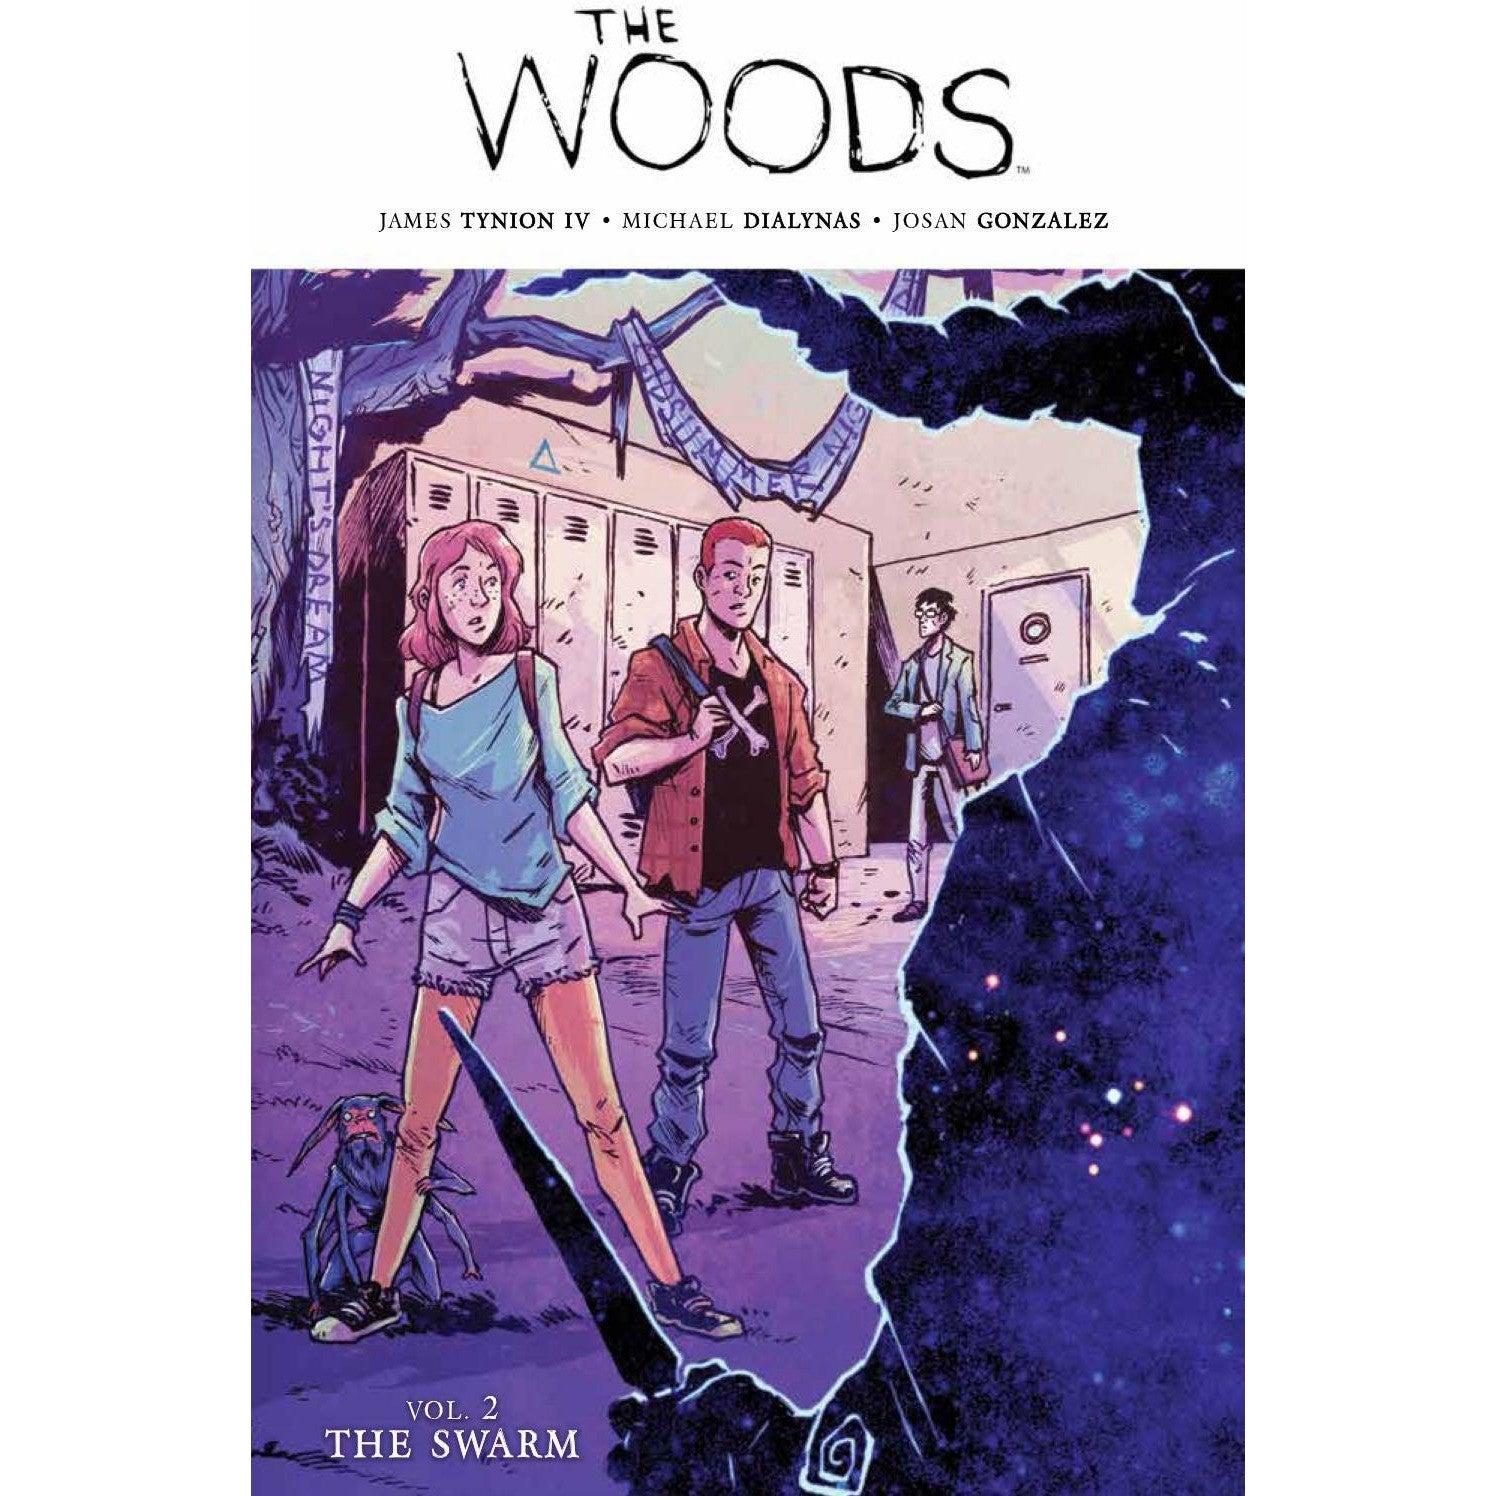  The Woods Vol. 2 The Swarm TP Uncanny!